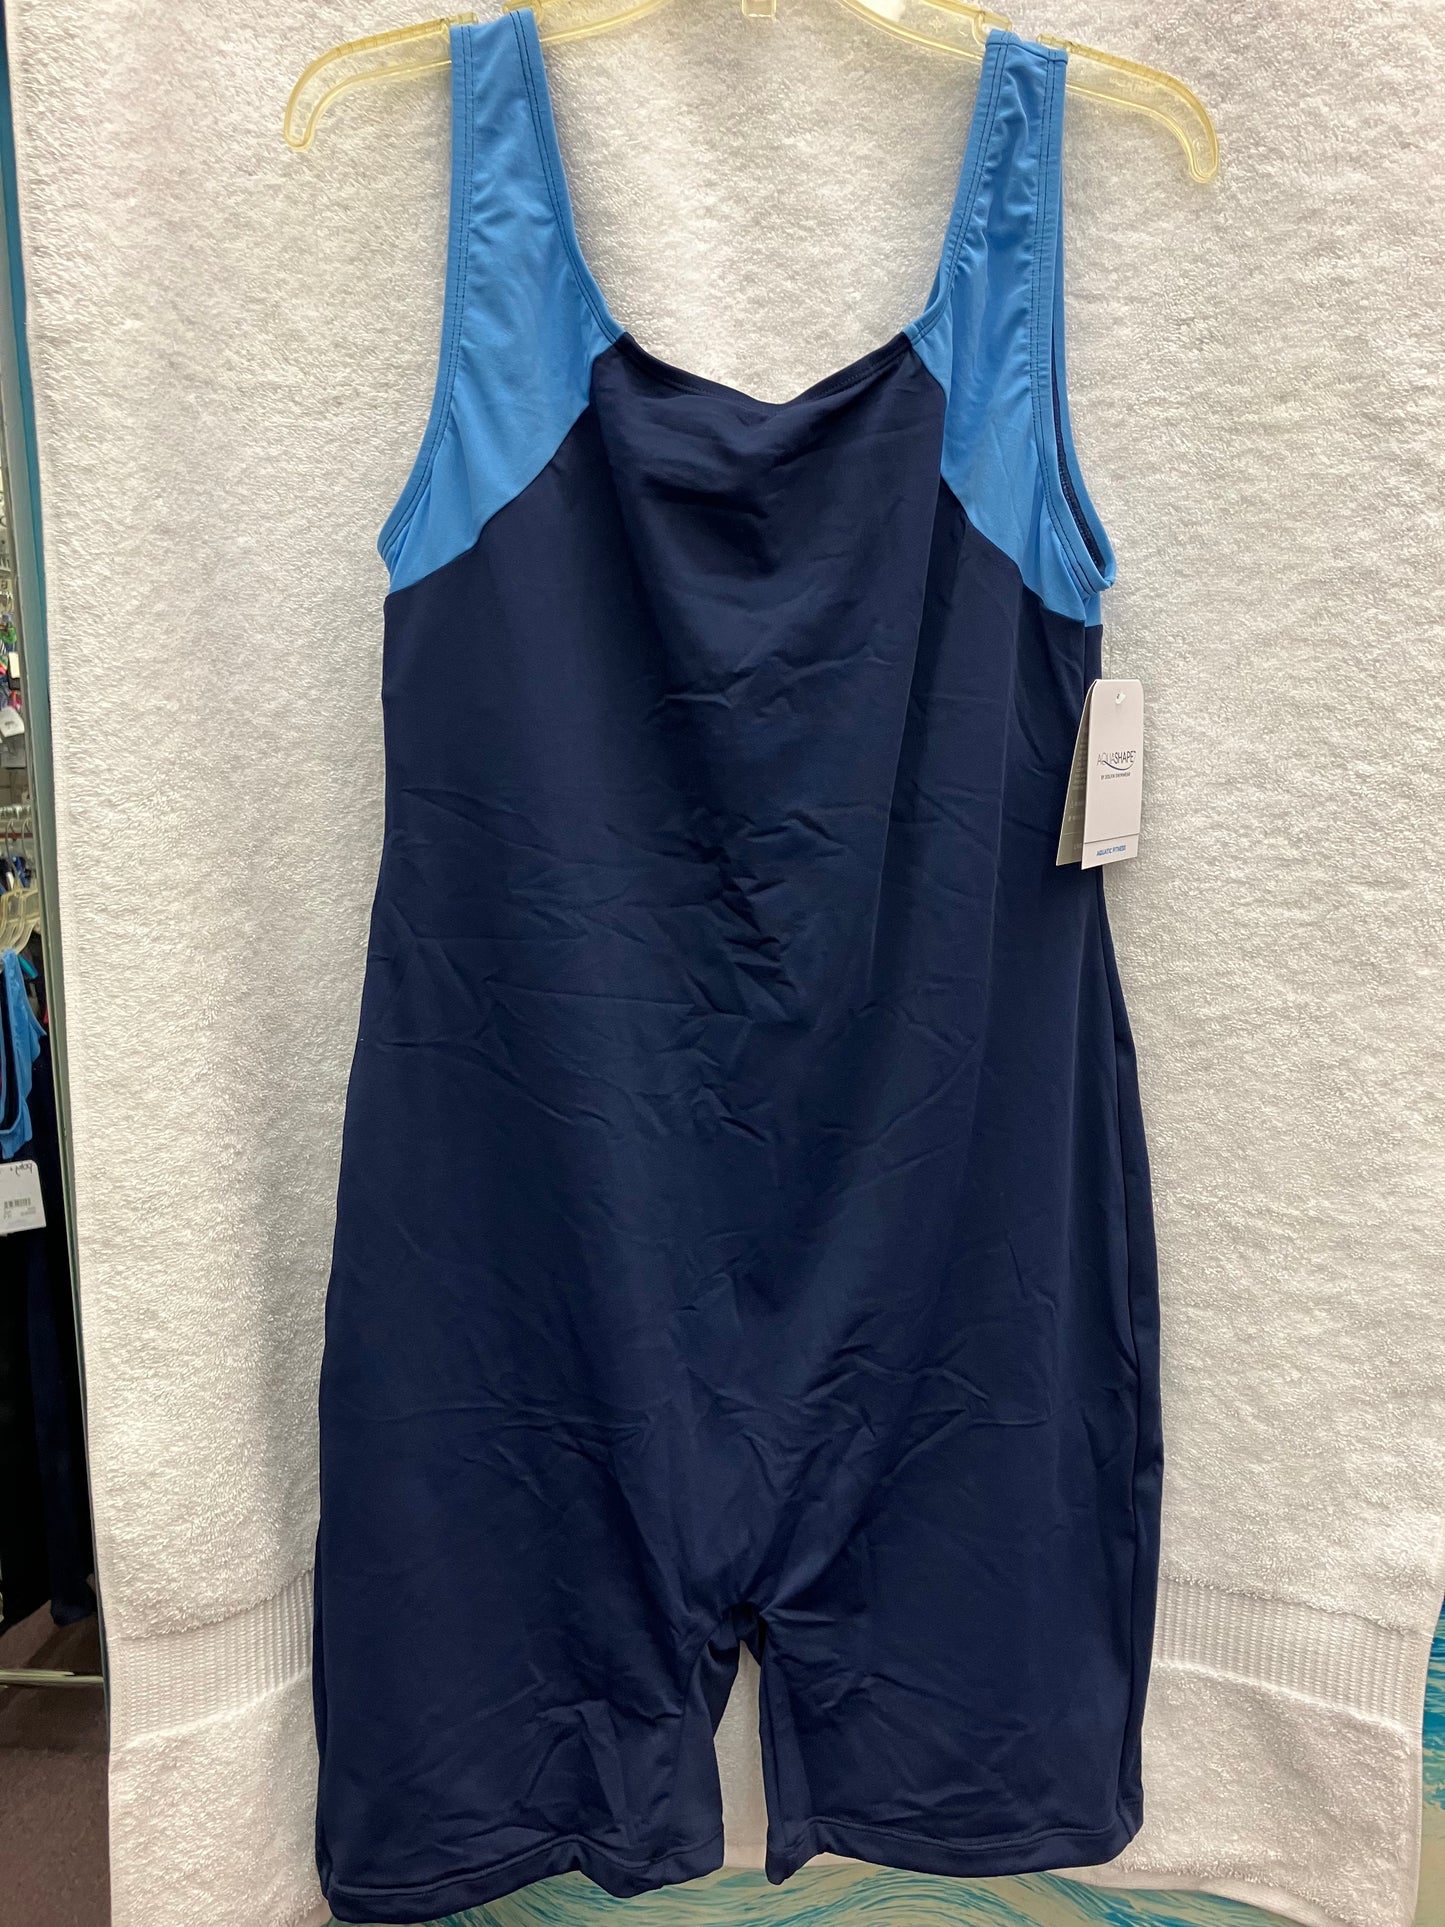 Dolfin Navy/Blue Instructor Suit Size 22